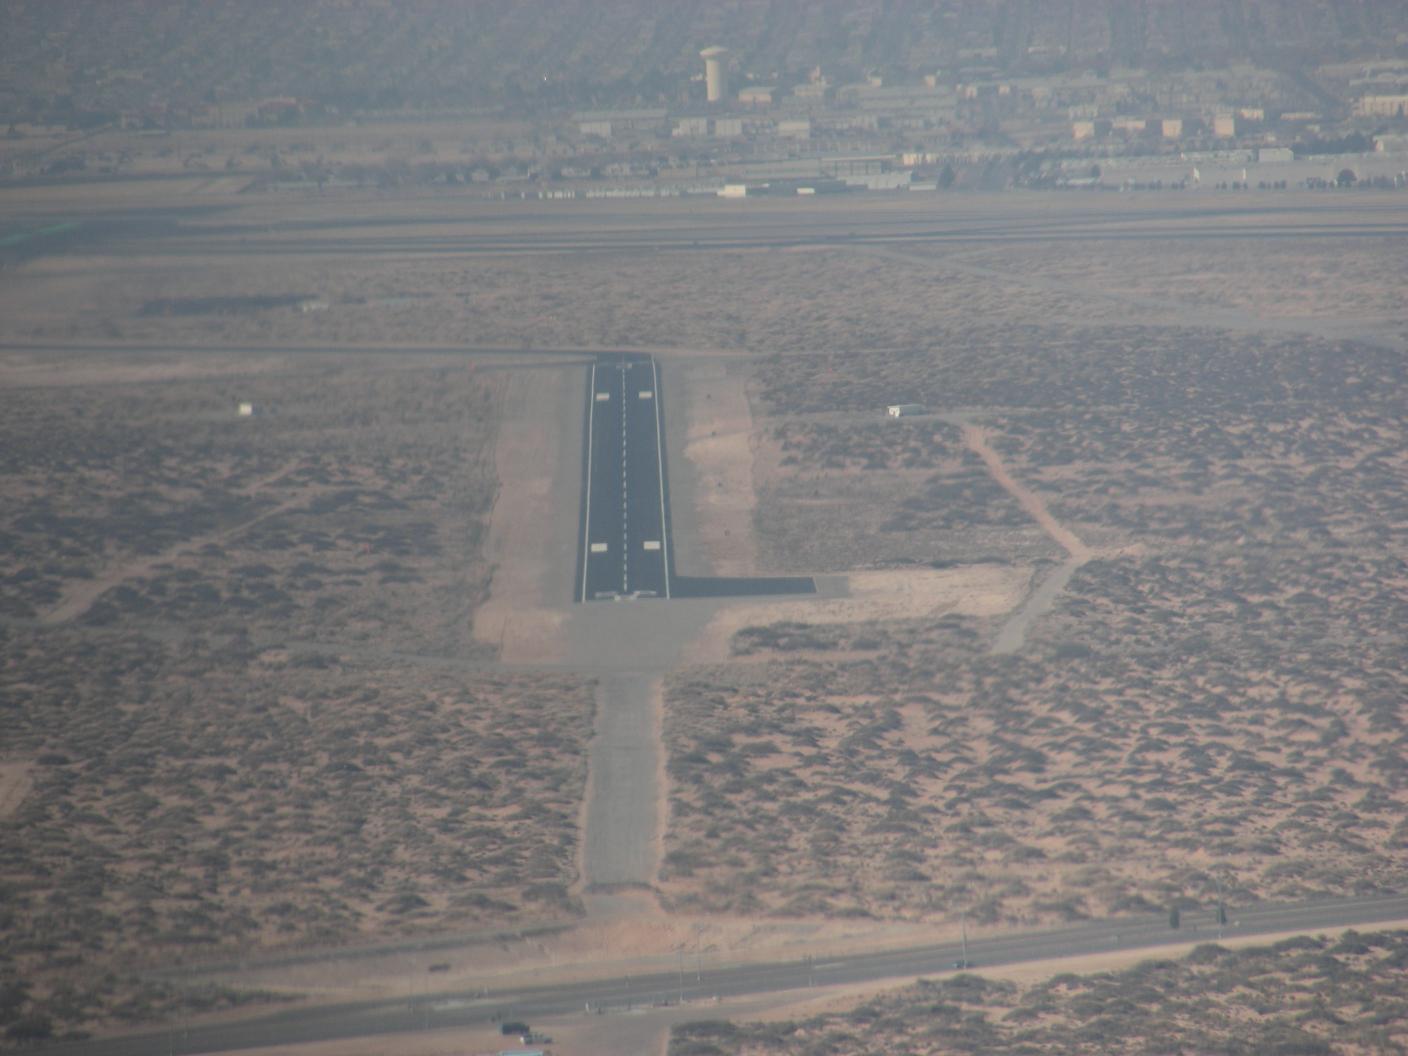 A little runway at El Paso International.